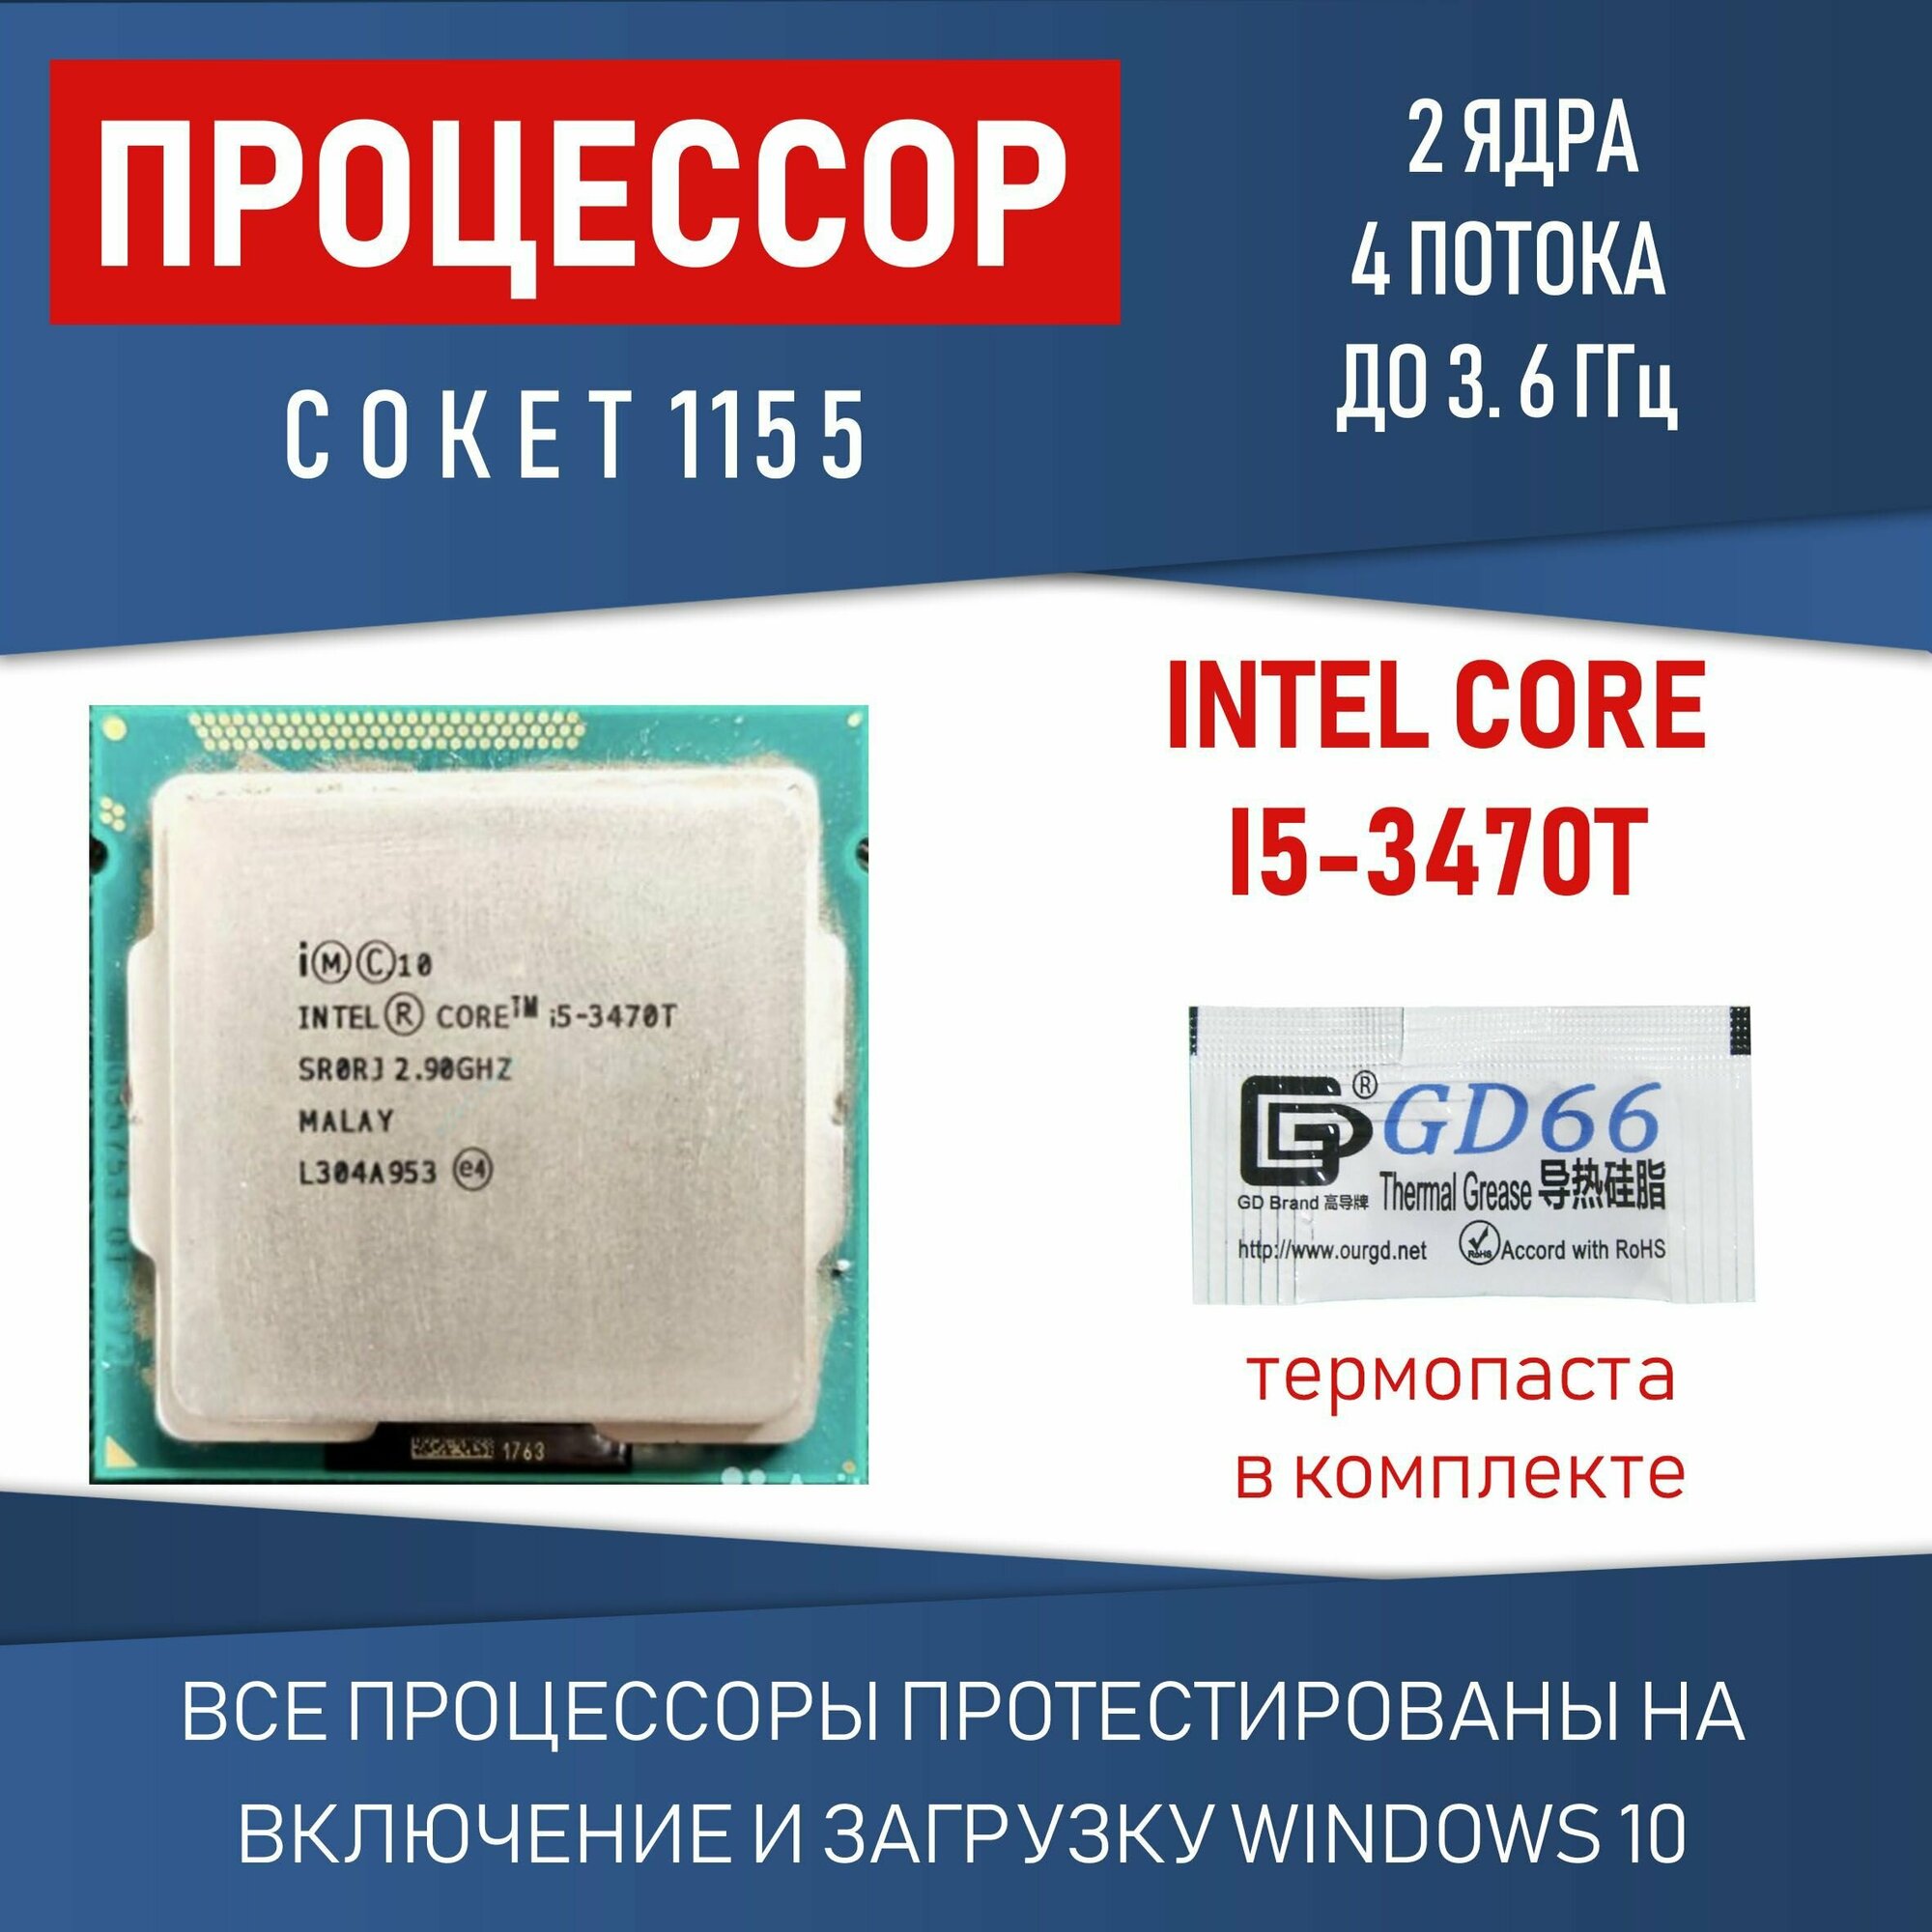 Процессор INTEL CORE I5 3470t сокет 1155 2 ядра 4 потока 35Вт OEM